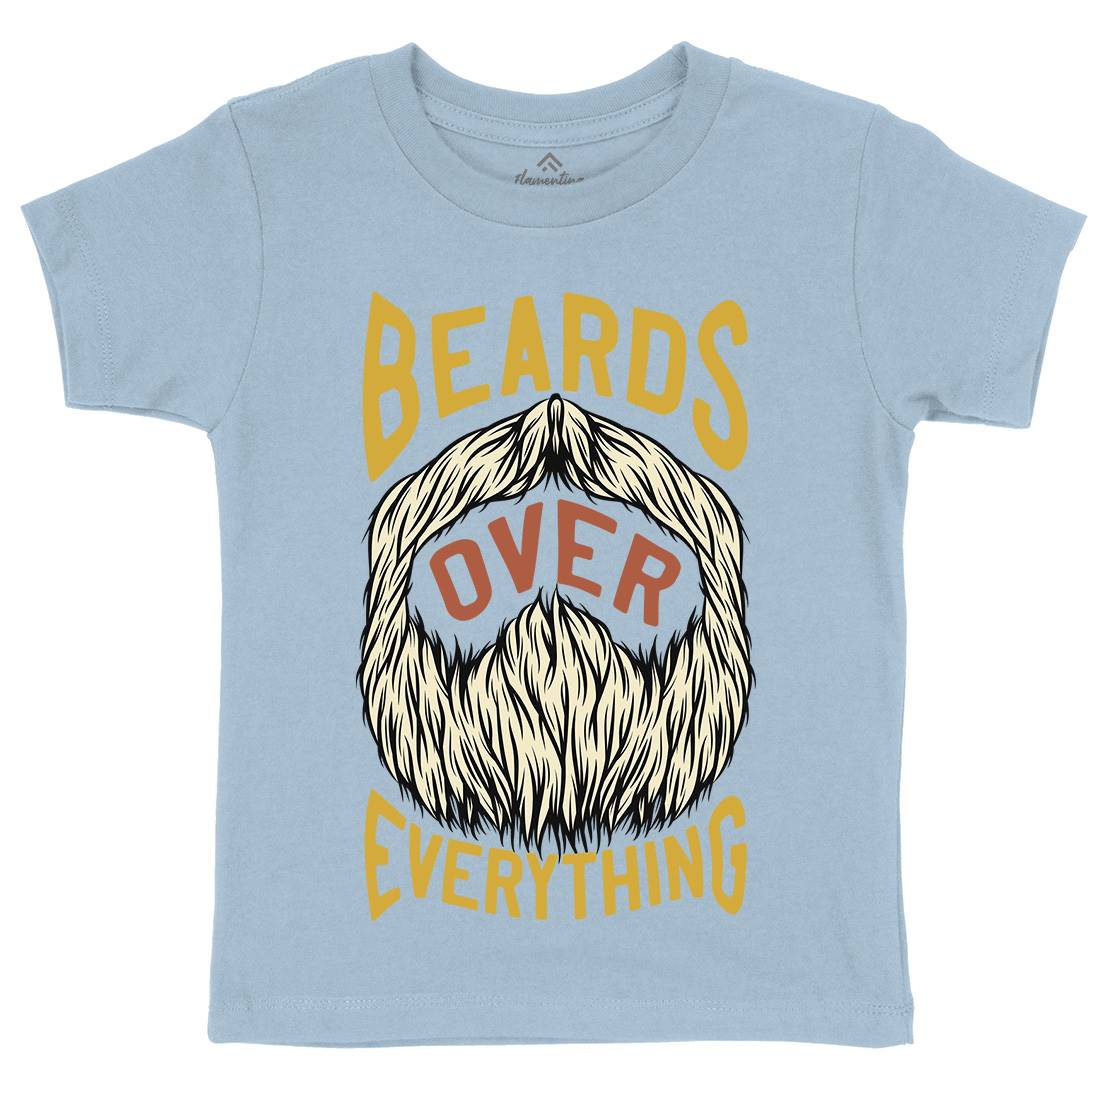 Beards Over Everything Kids Crew Neck T-Shirt Barber C803